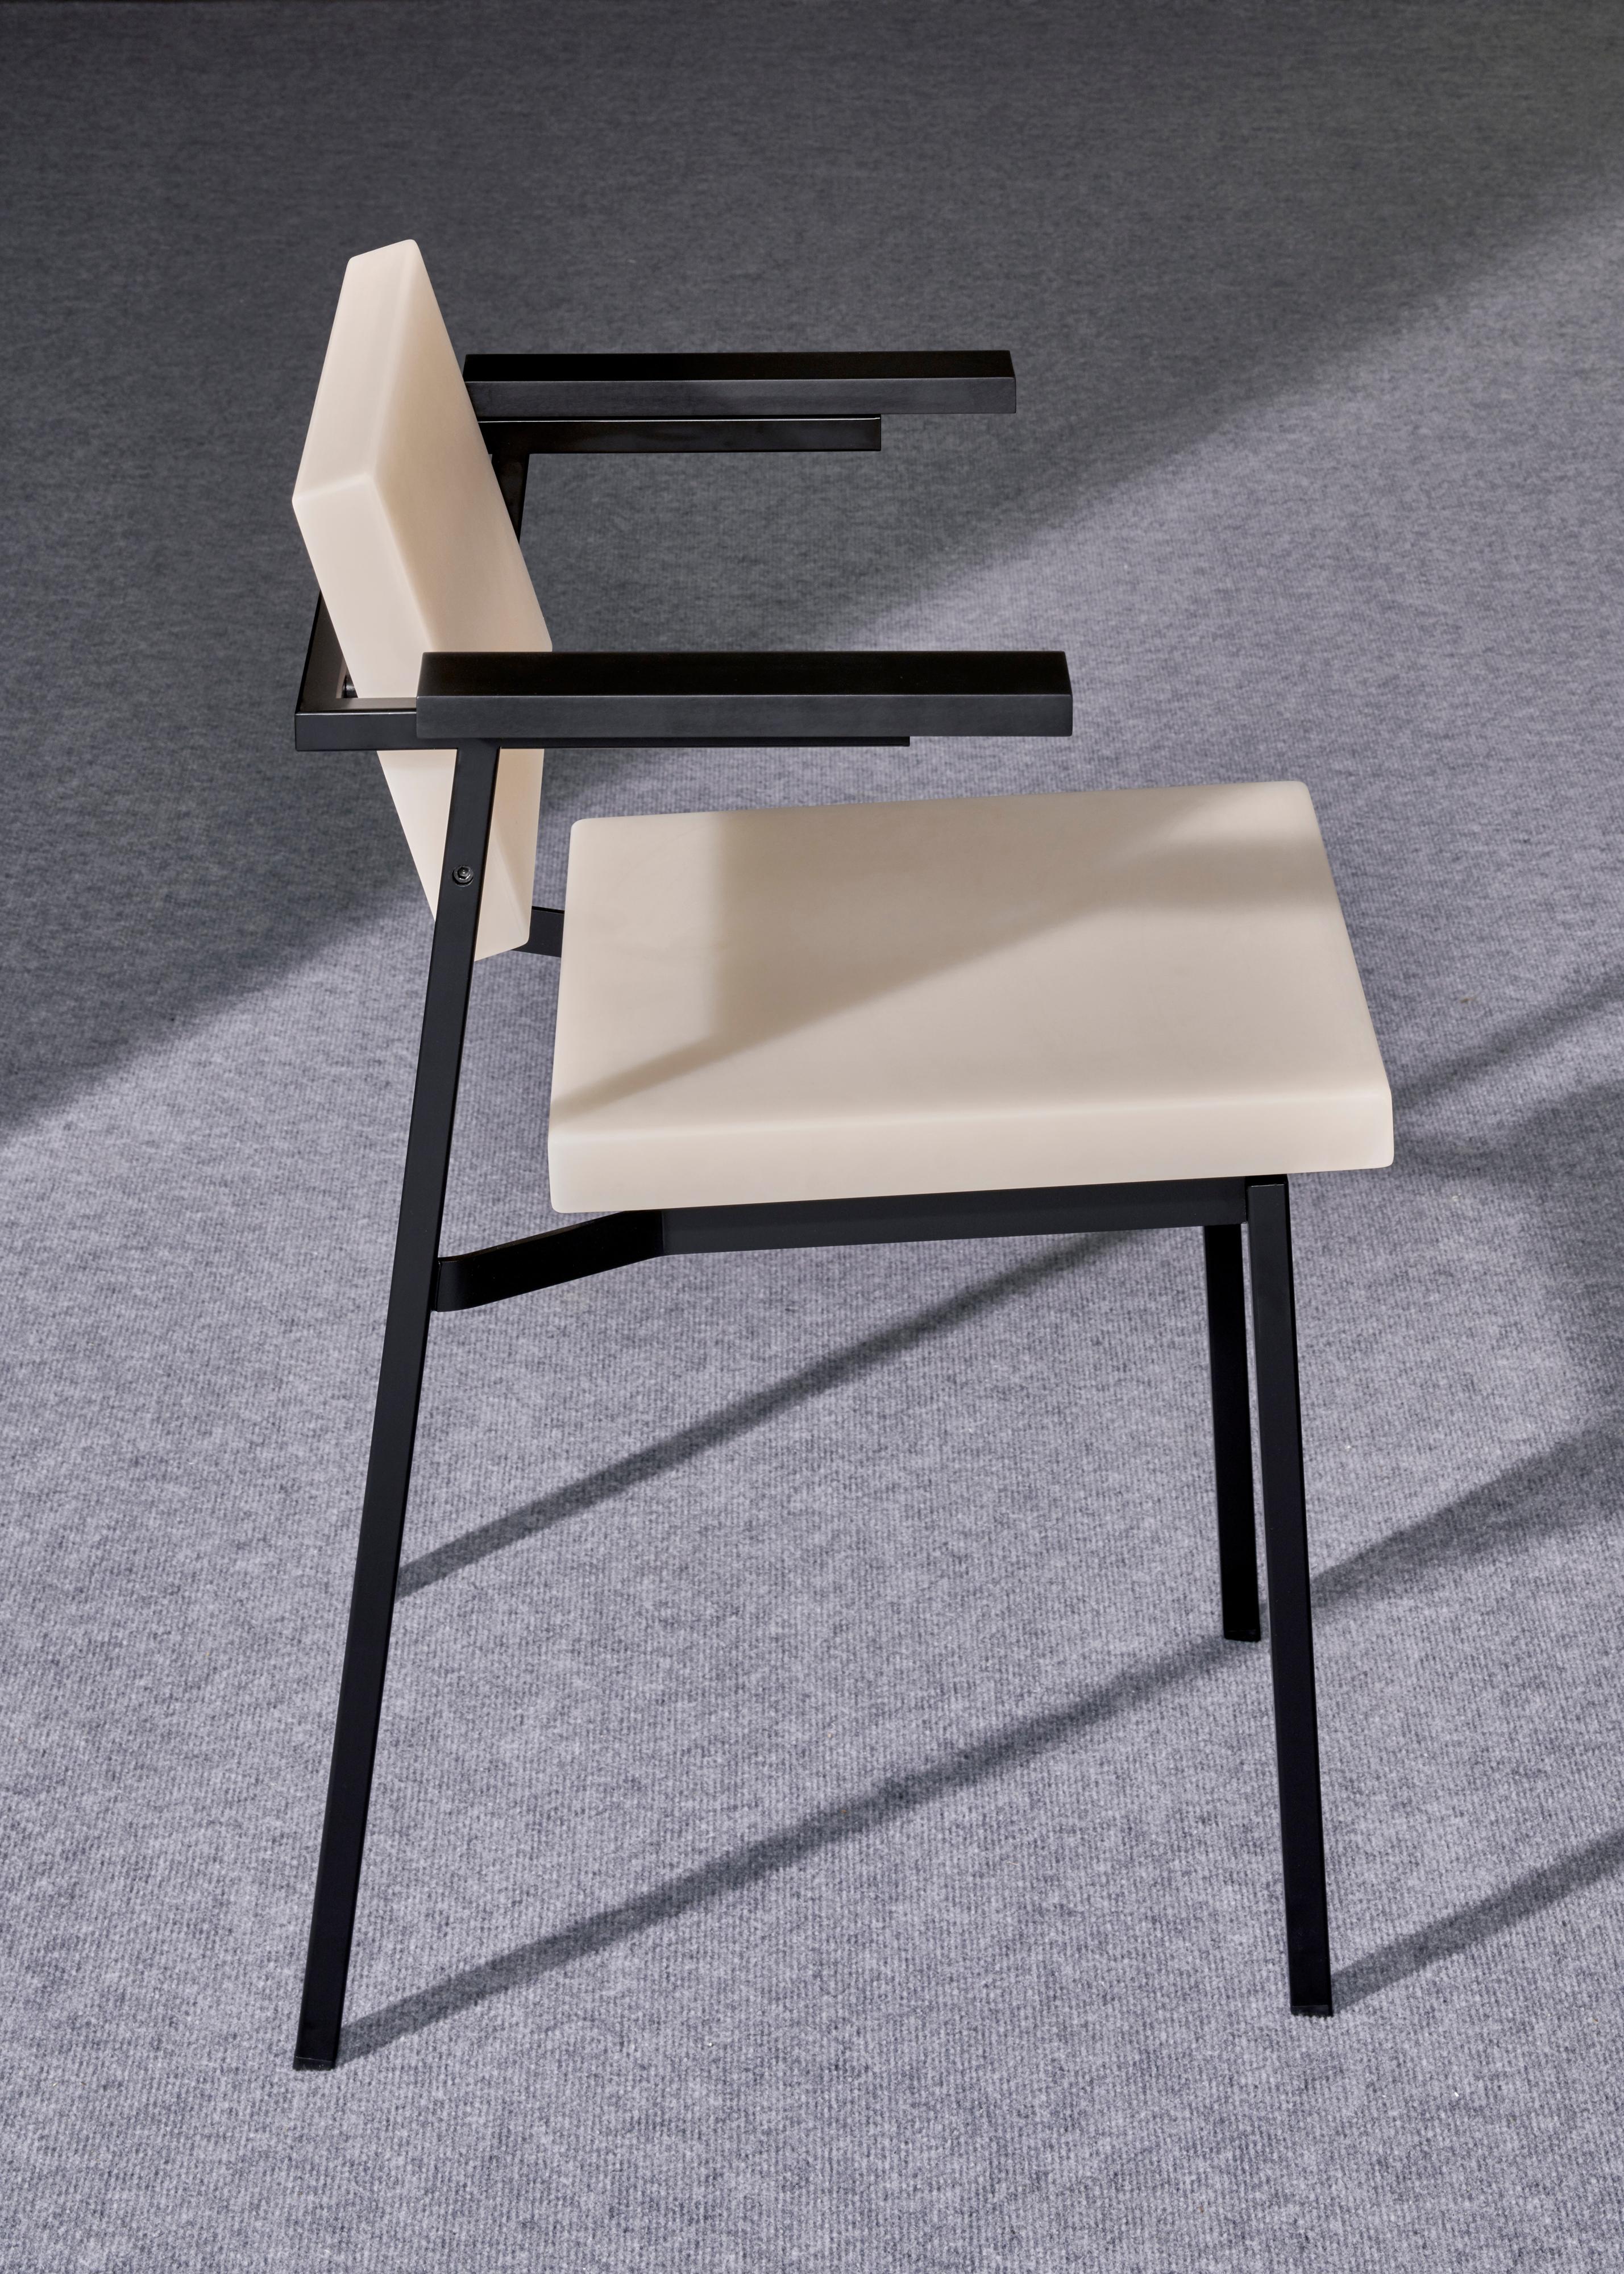 Dutch Contemporary Resin SE69 armchair 2019 by Sabine Marcelis For Sale